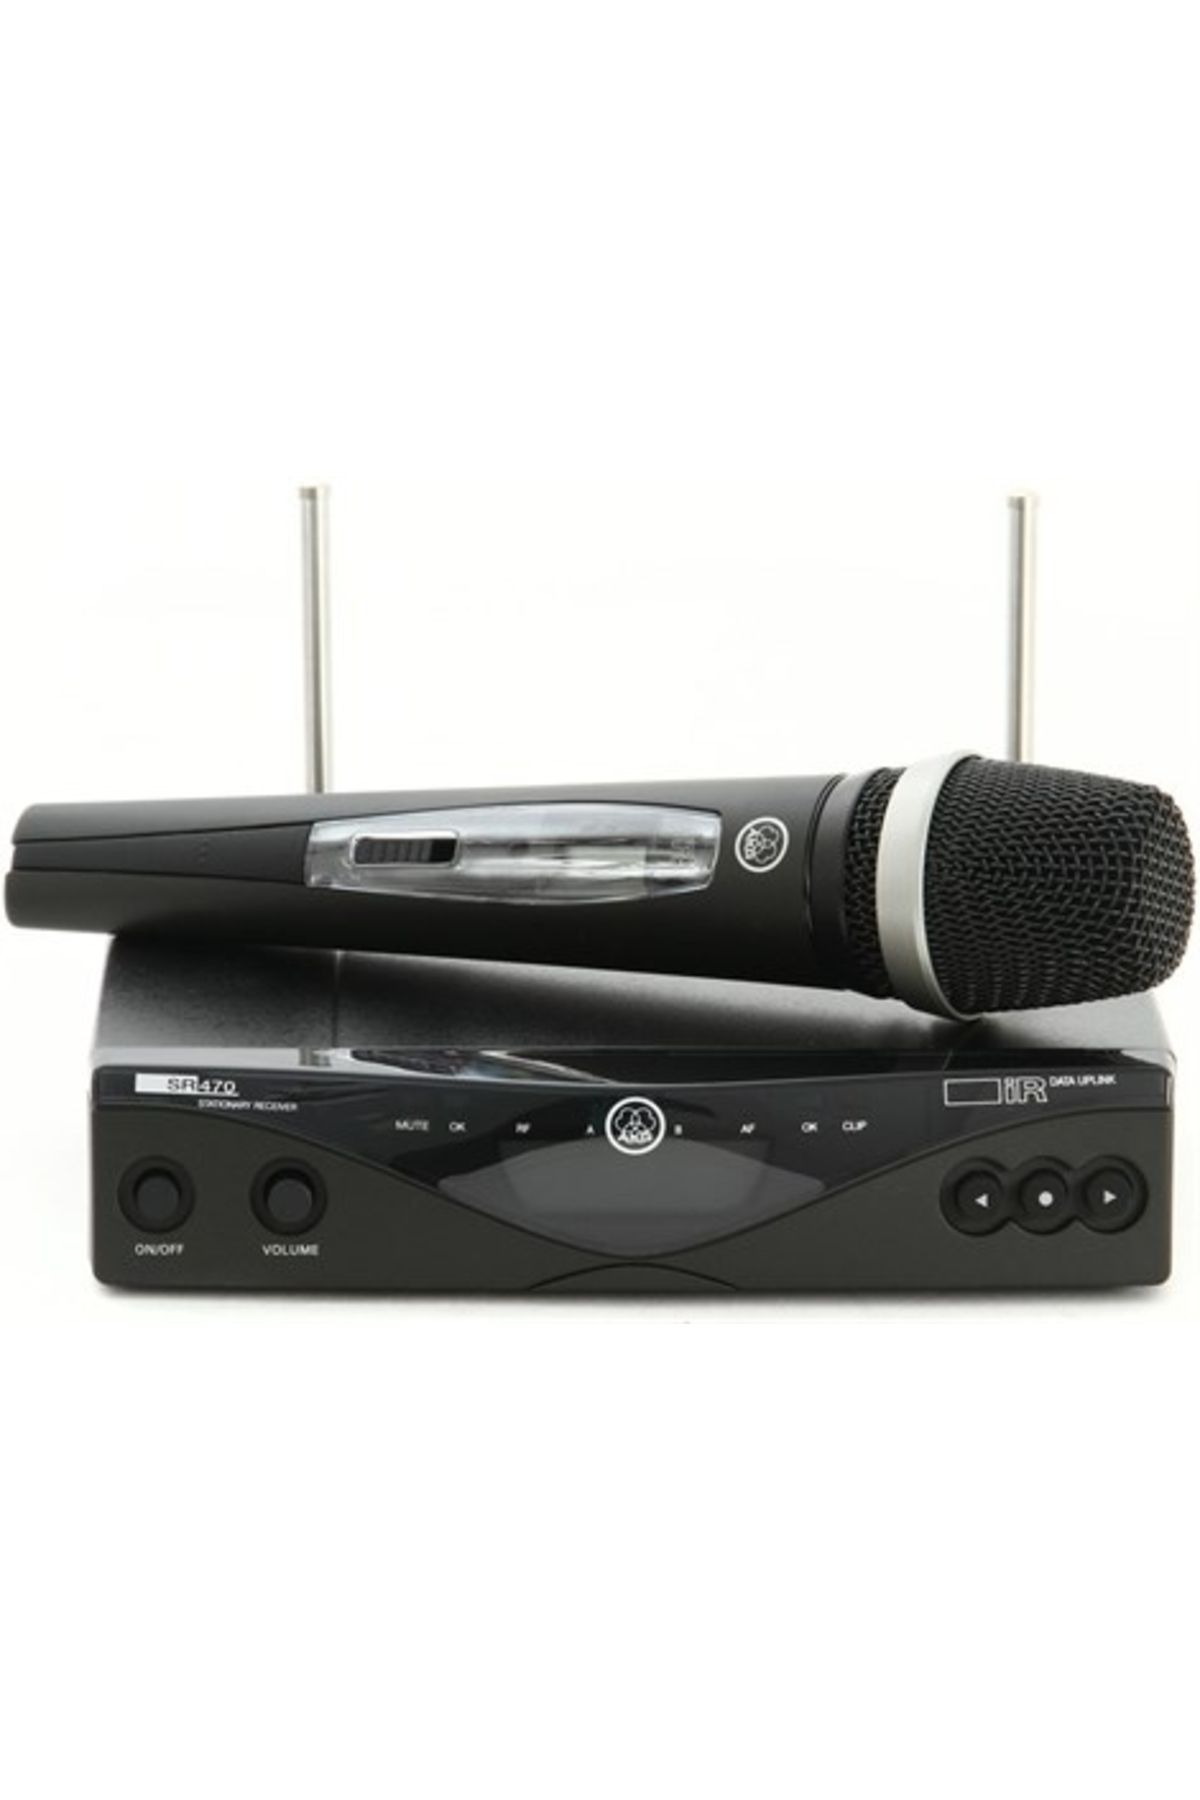 Akg Wms470 D5 Set El Tipi Kablosuz Mikrofon Seti, 600.1 To 630.5 Mhz